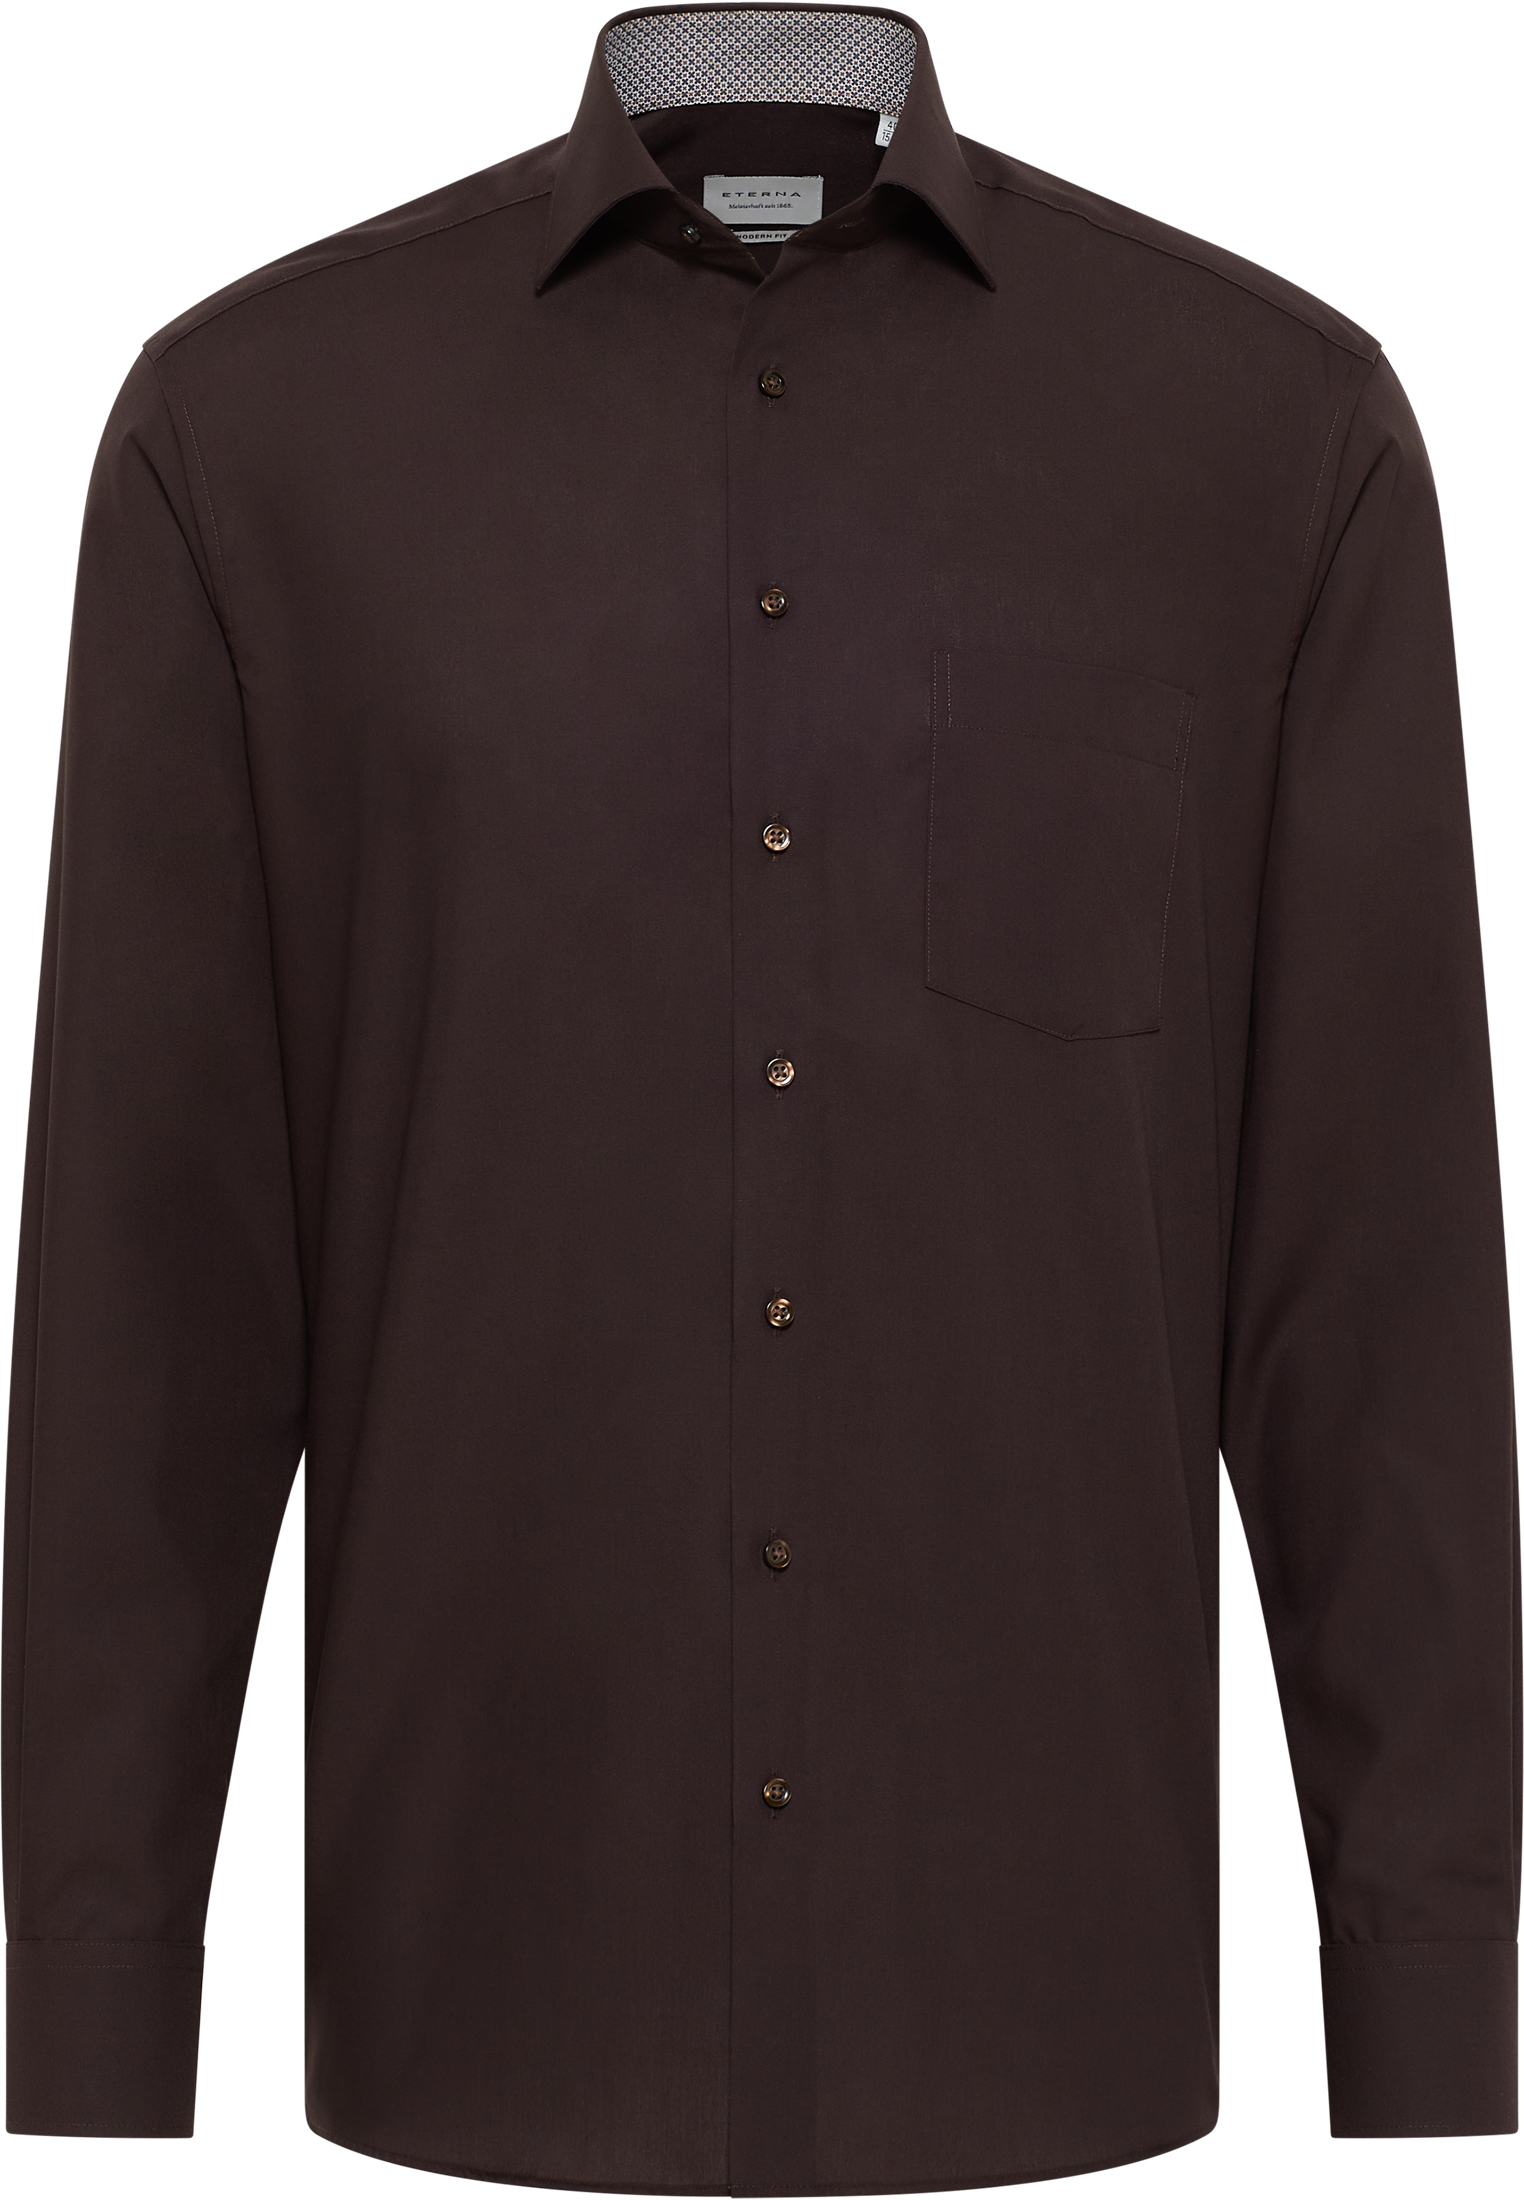 MODERN FIT Original Shirt in dark brown plain